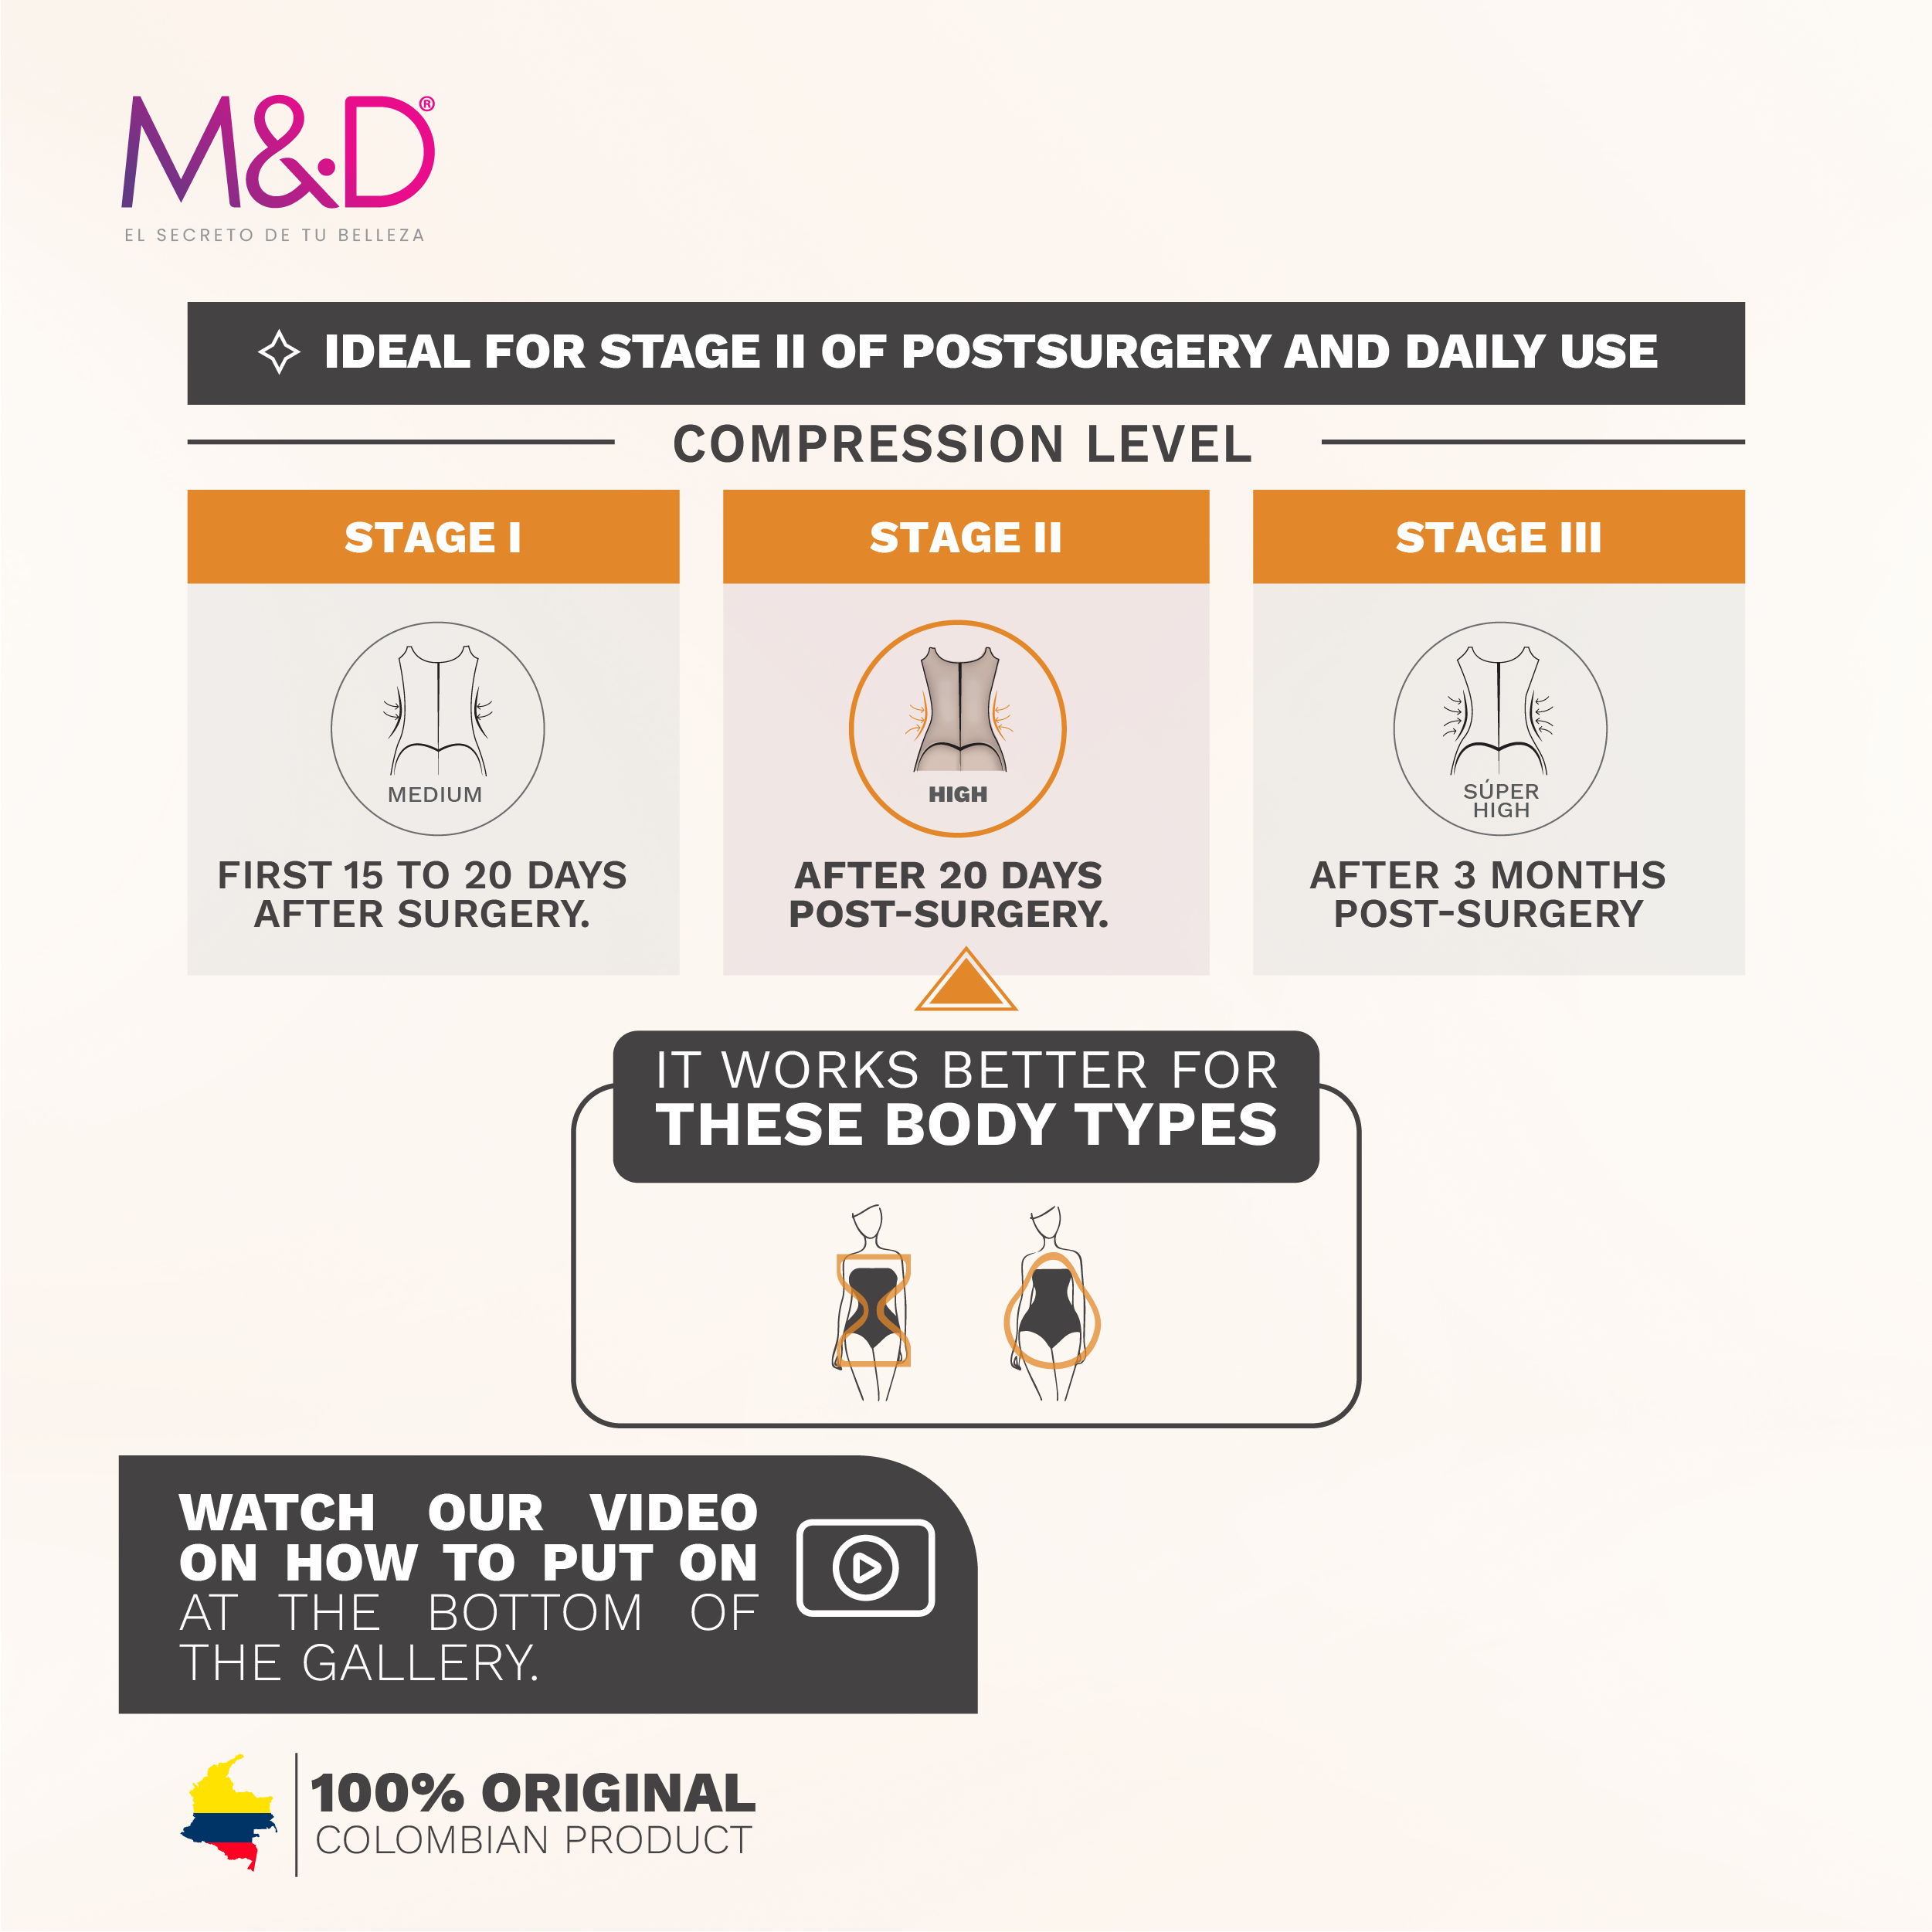 Fajas MYD F 0269 | Open Bust Post Surgery Faja for Women Mid Thigh Shaper  w/ Wide Adjustable Straps